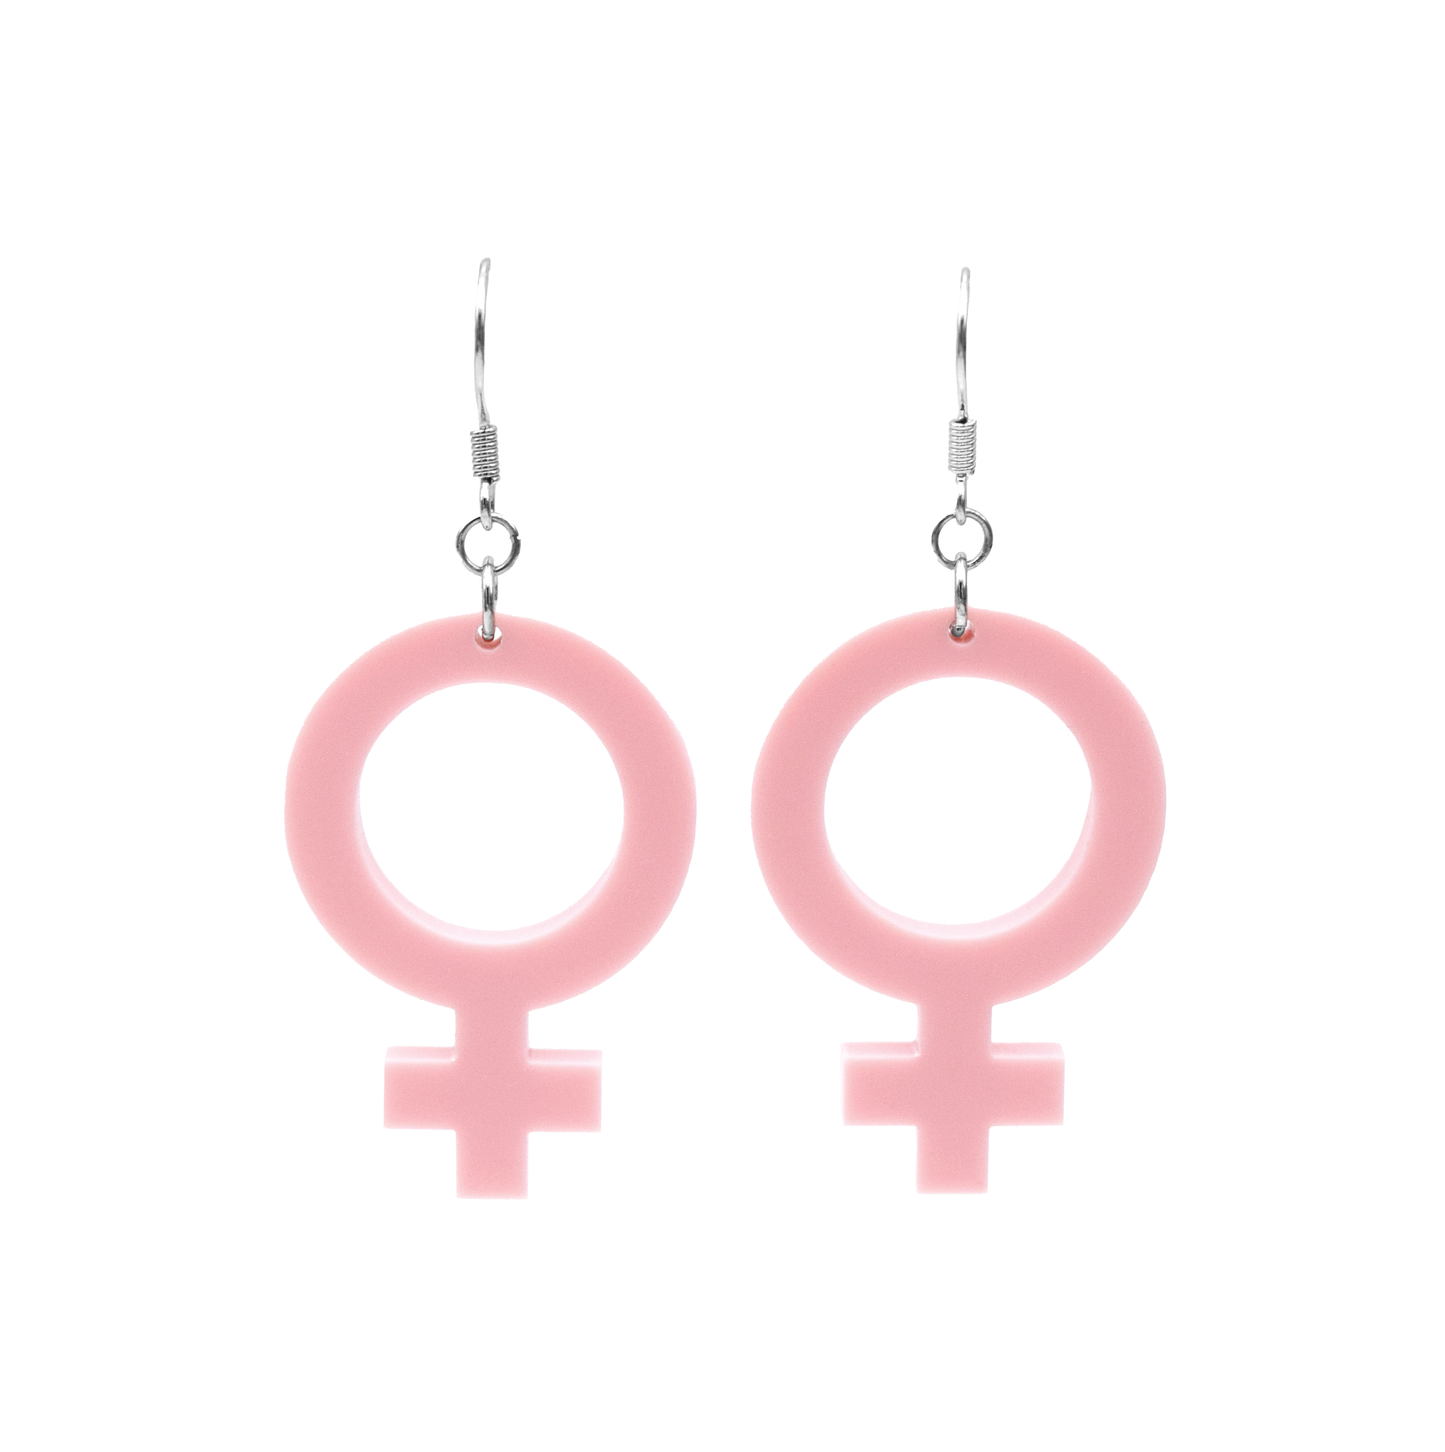 female symbol earrings